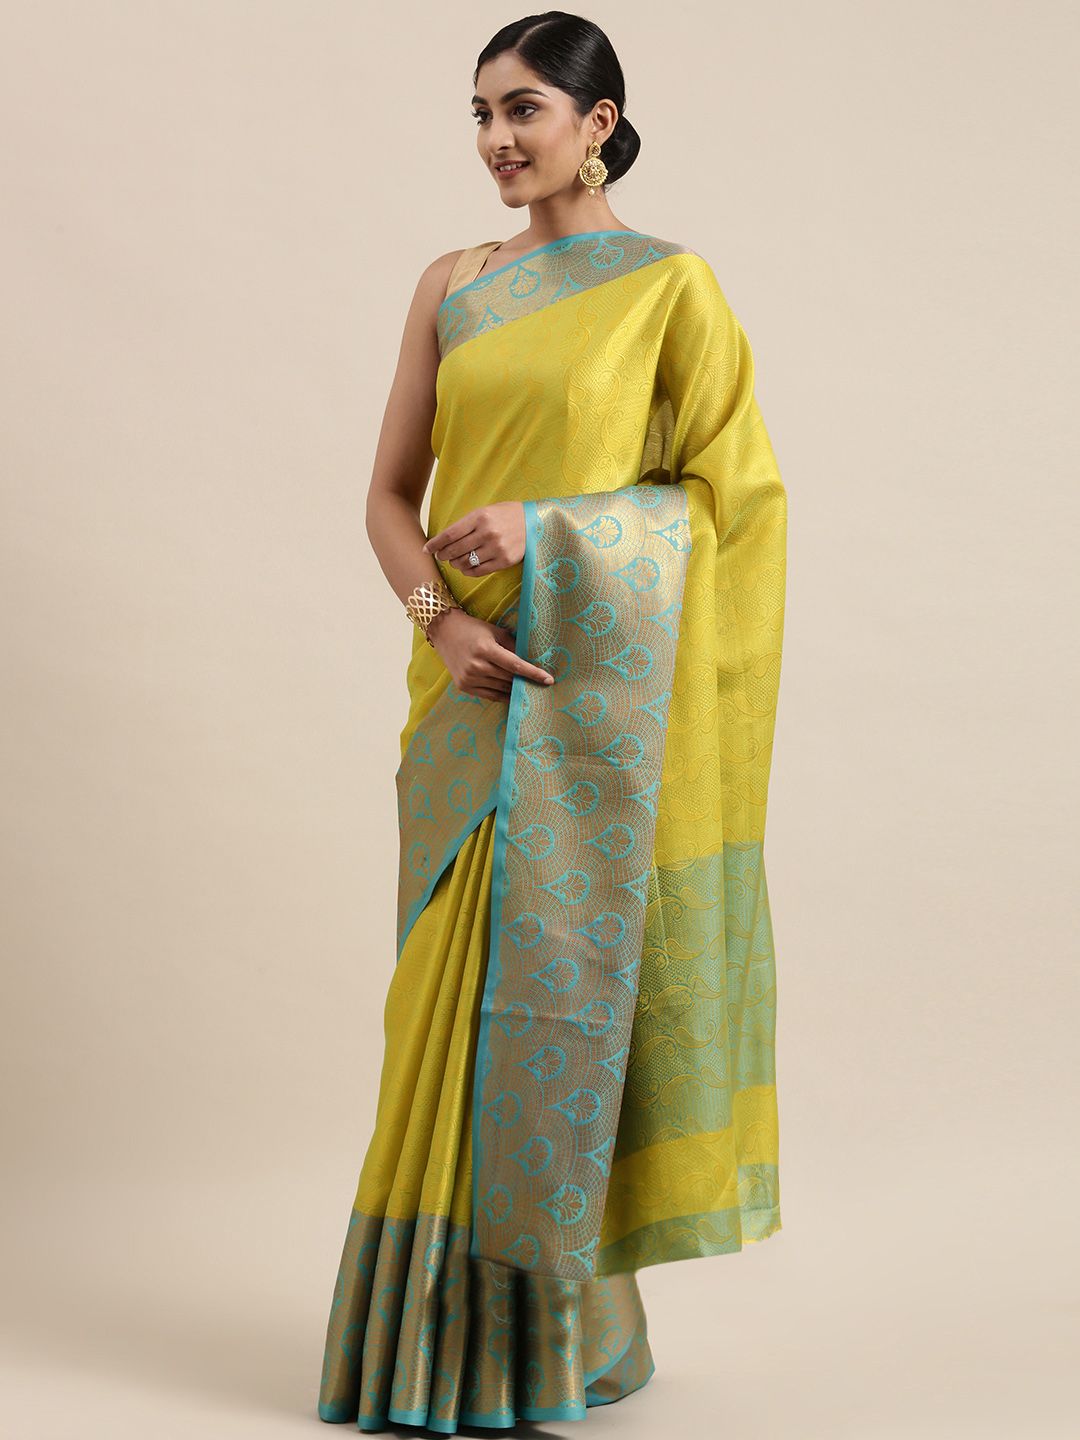 Pothys Yellow & Blue Ethnic Motifs Zari Jute Silk Saree Price in India